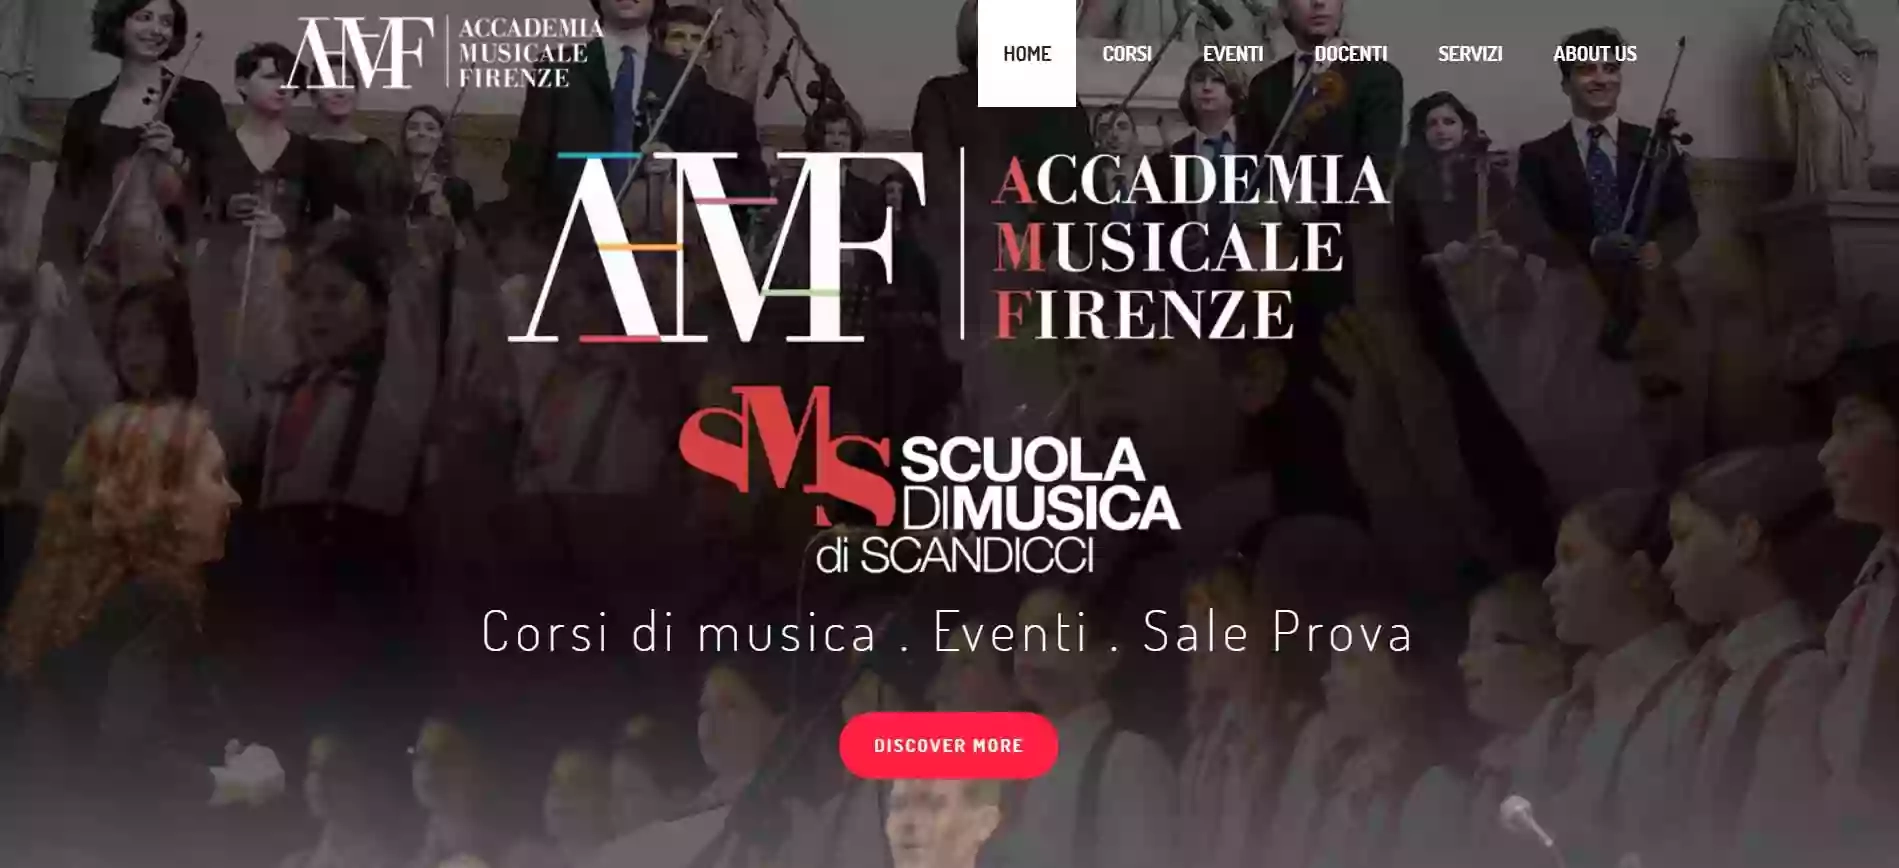 Accademia Musicale Di Firenze